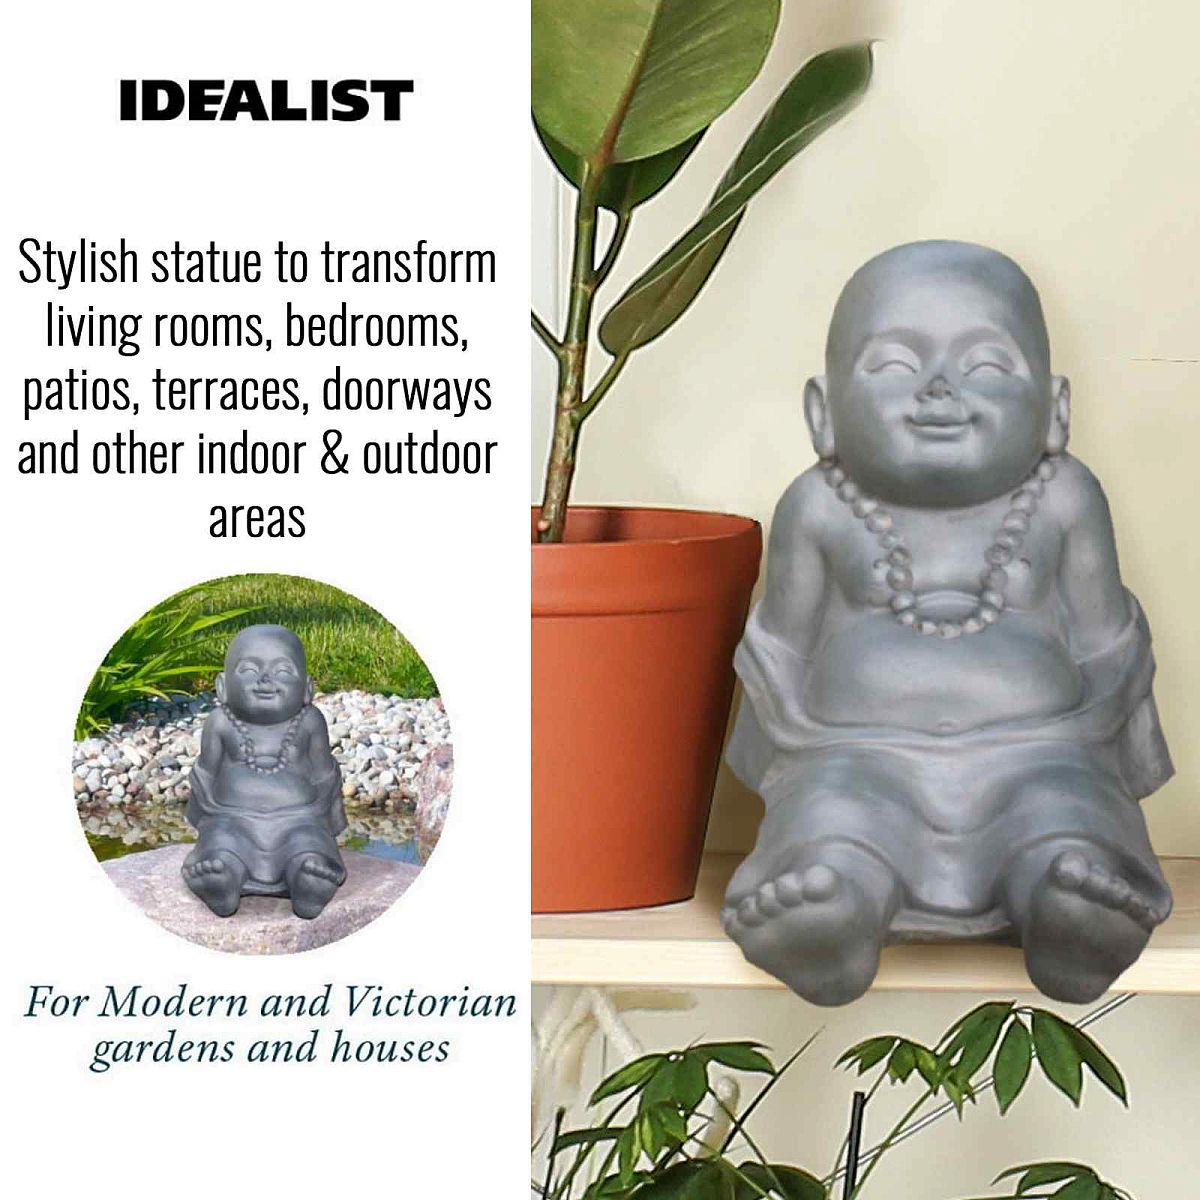 IDEALIST Lite Resting Baby Monk Grey Indoor and Outdoor Statue L31 W22.5 H26 cm